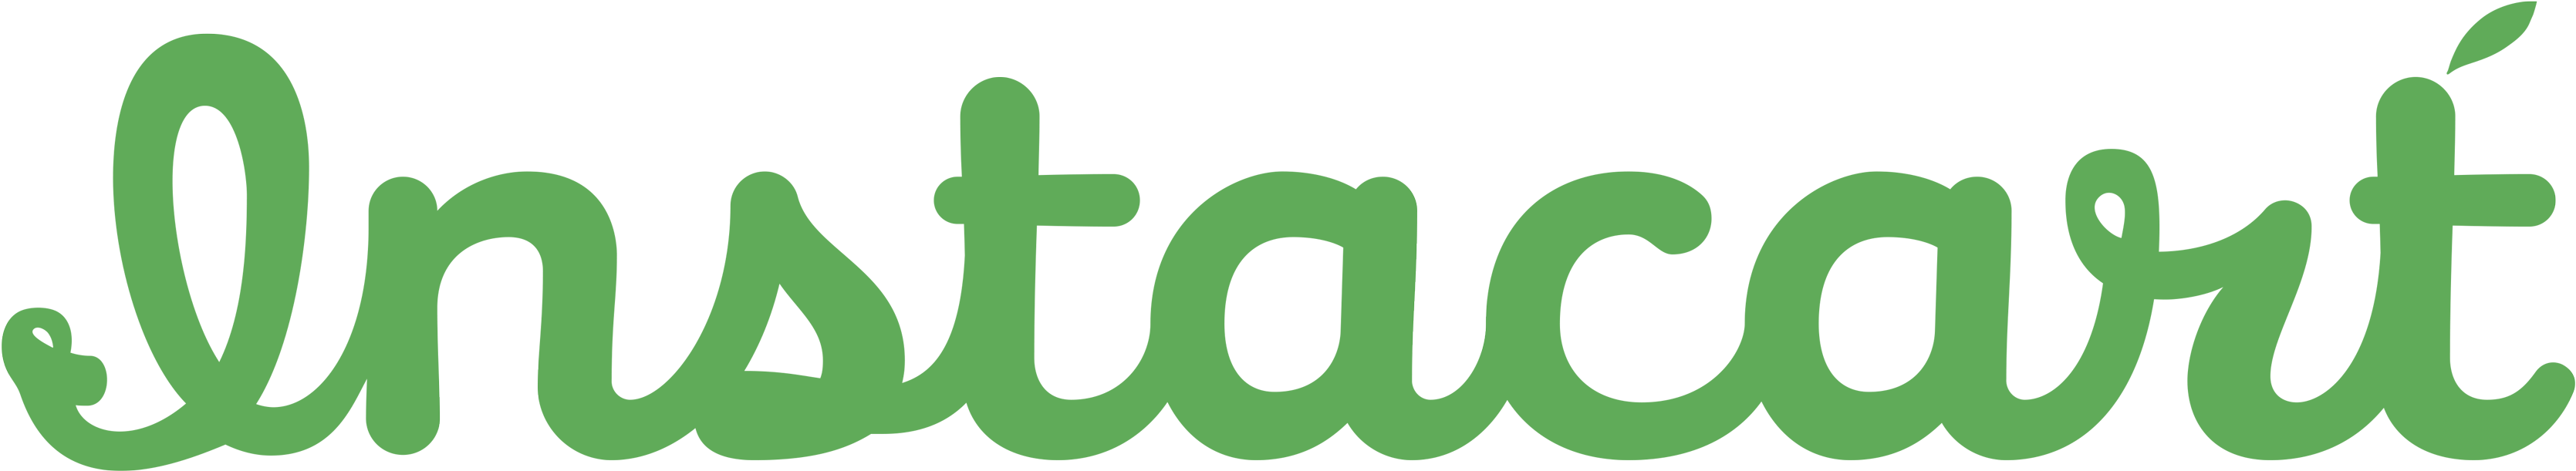 Instacart-logo - Amazon Fresh Market Share (3420x1000)